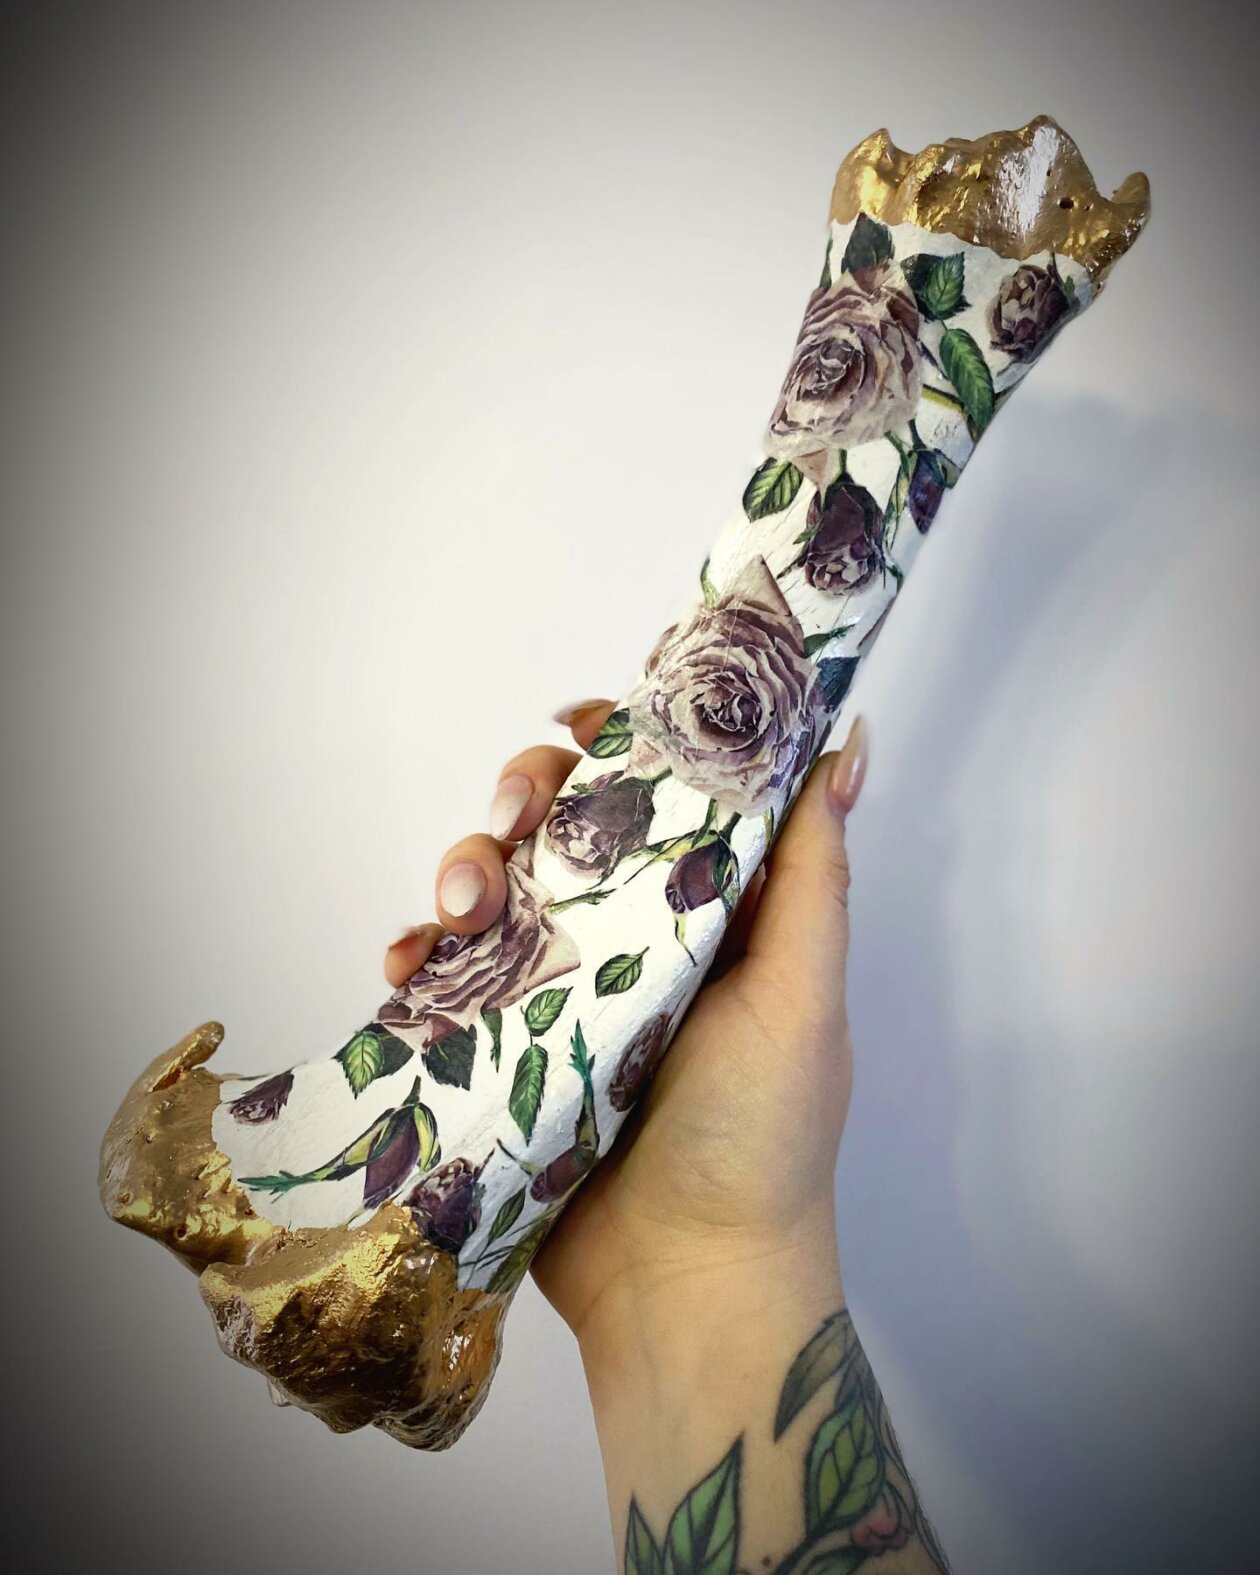 The Floral Decorated Bone And Skull Art Of Emmanuelle Jobidon (28)